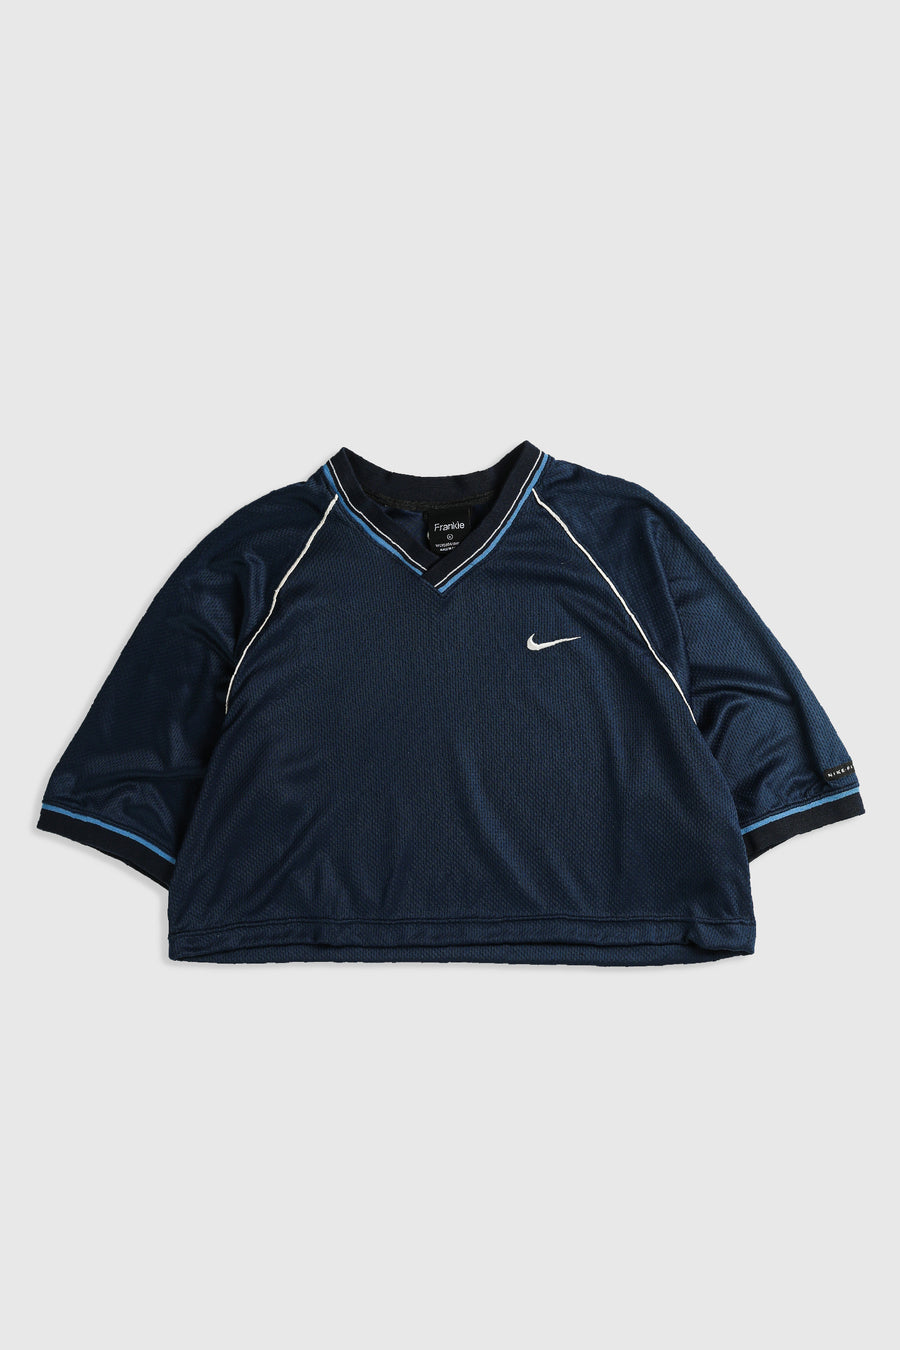 Rework Nike Crop Jersey - XL